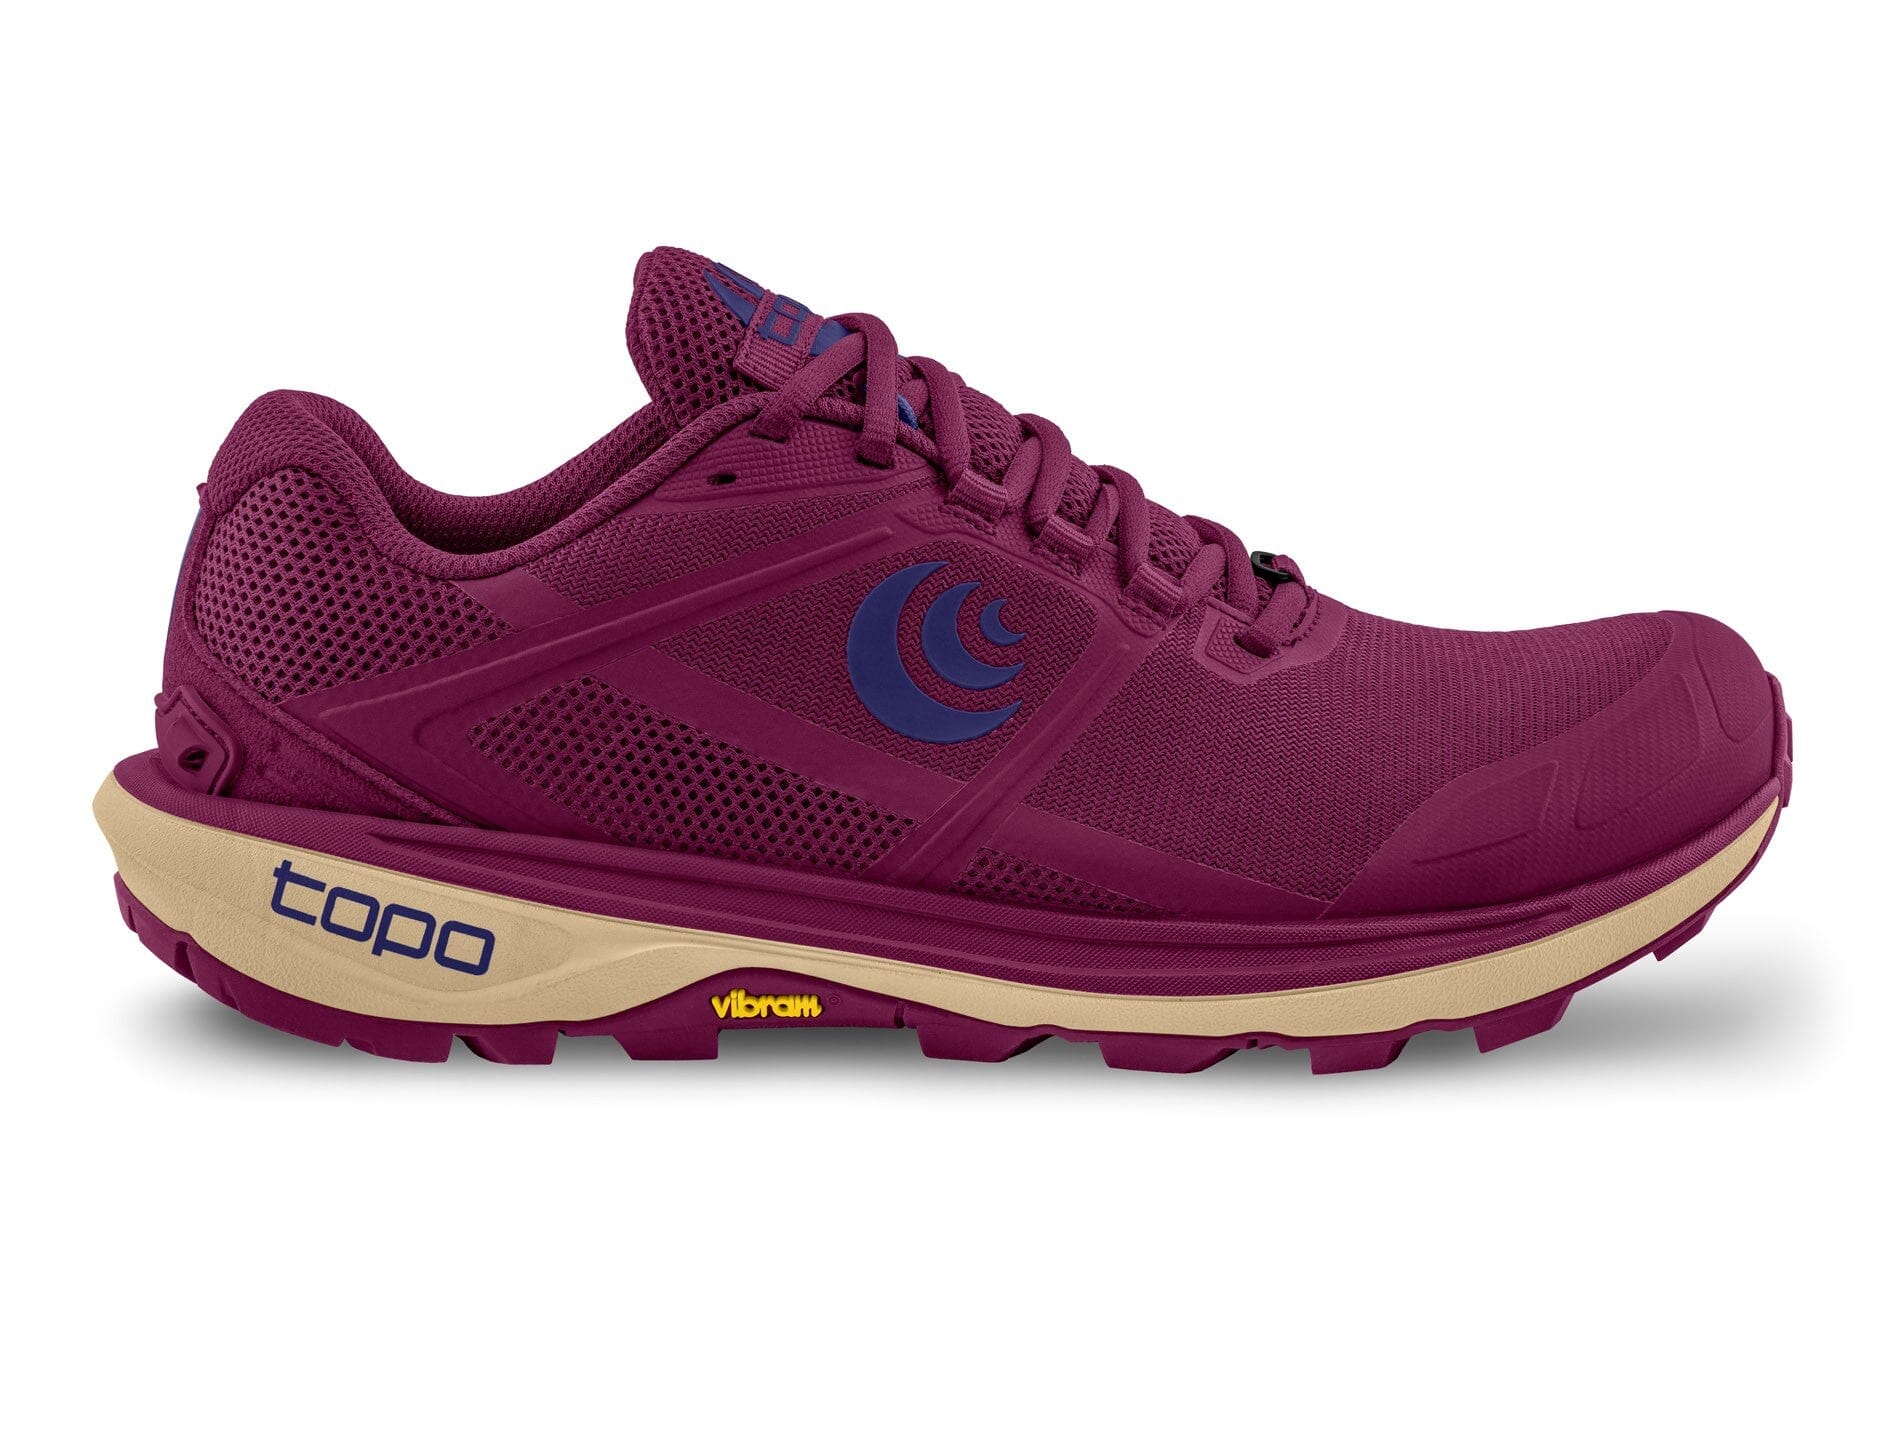 Topo Women's Terraventure 4 Trail Running Shoes Berry/Violet US 7 